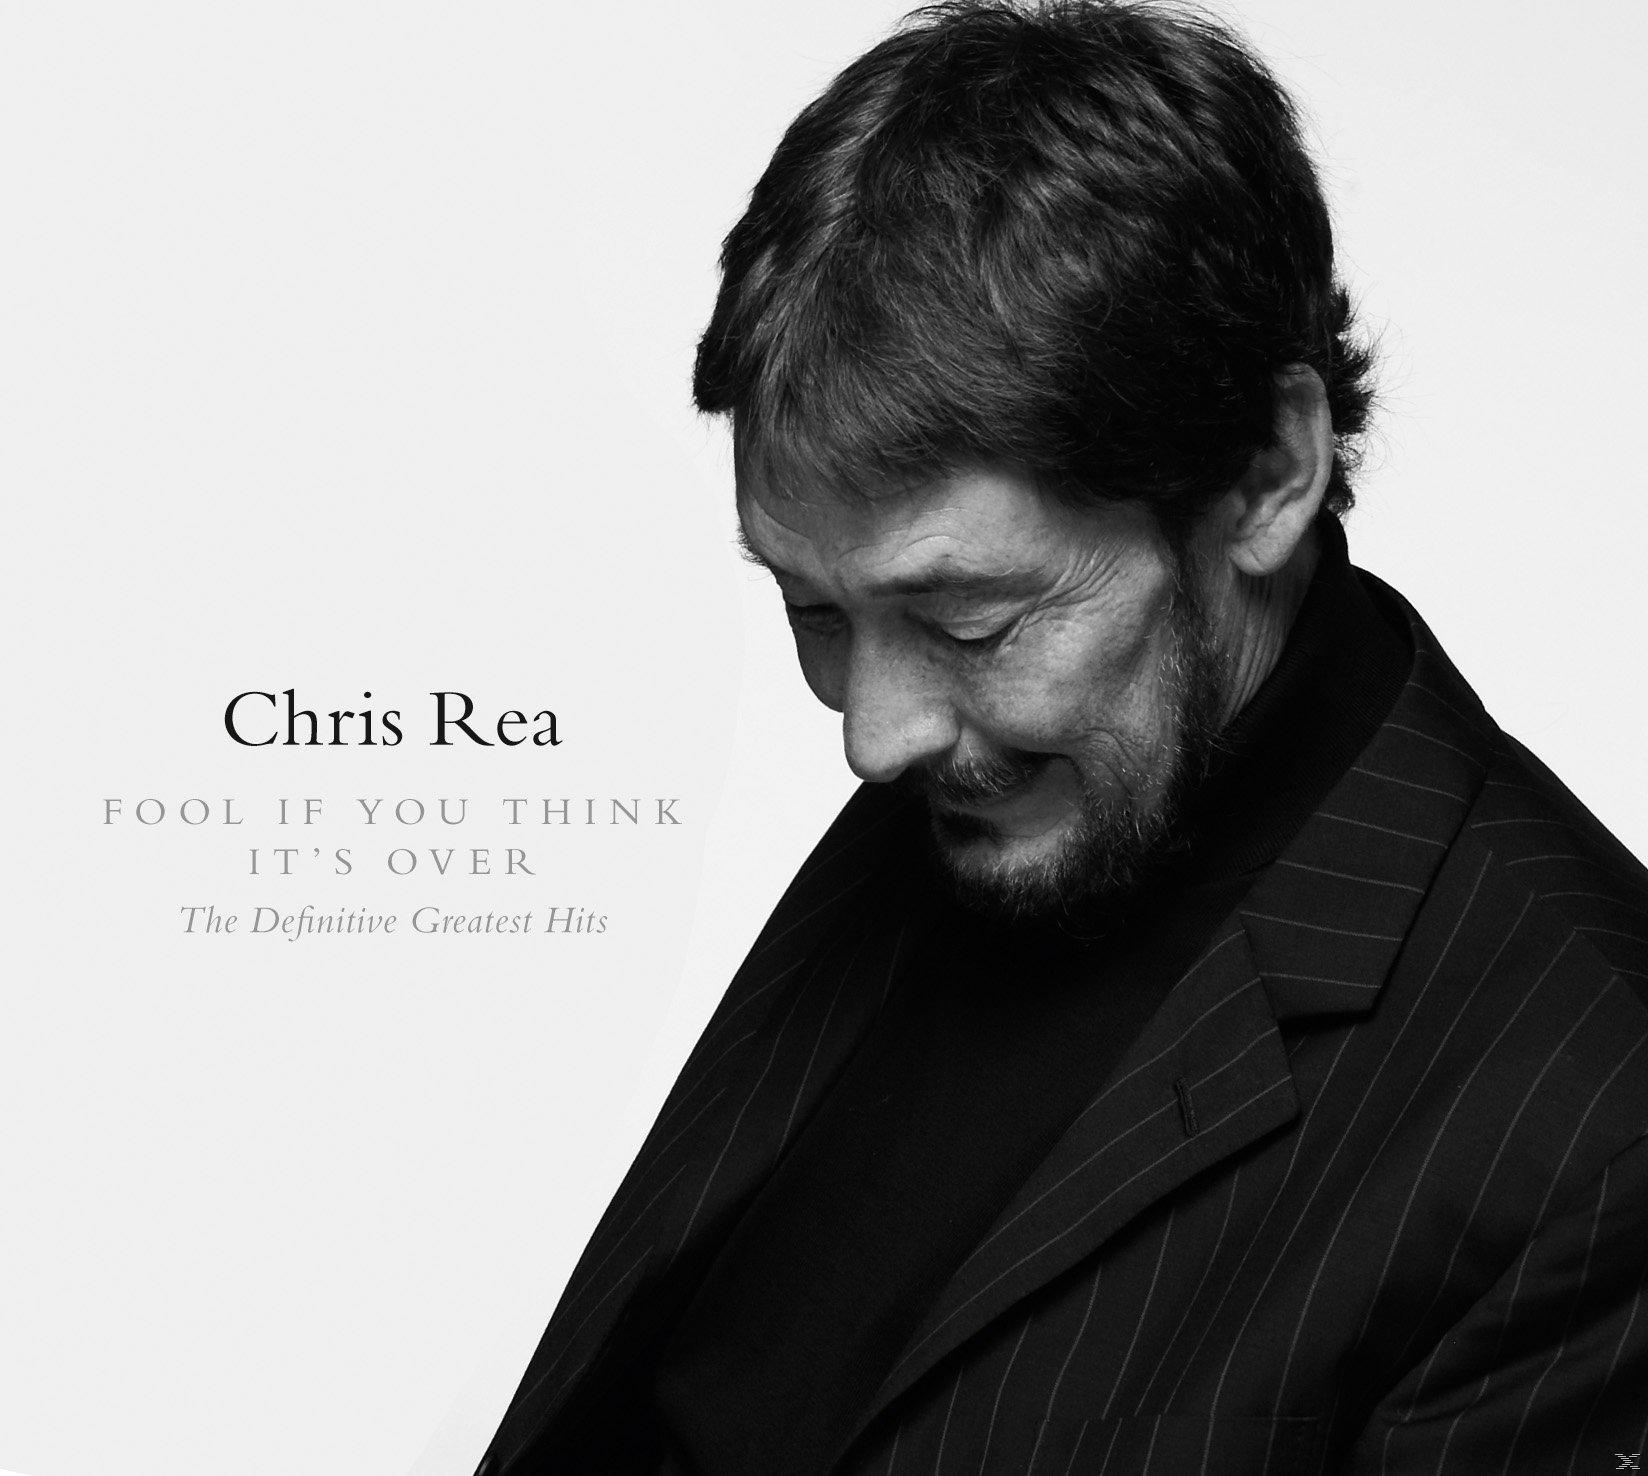 Chris Rea - Greatest Hits The (Vinyl) Definitive 